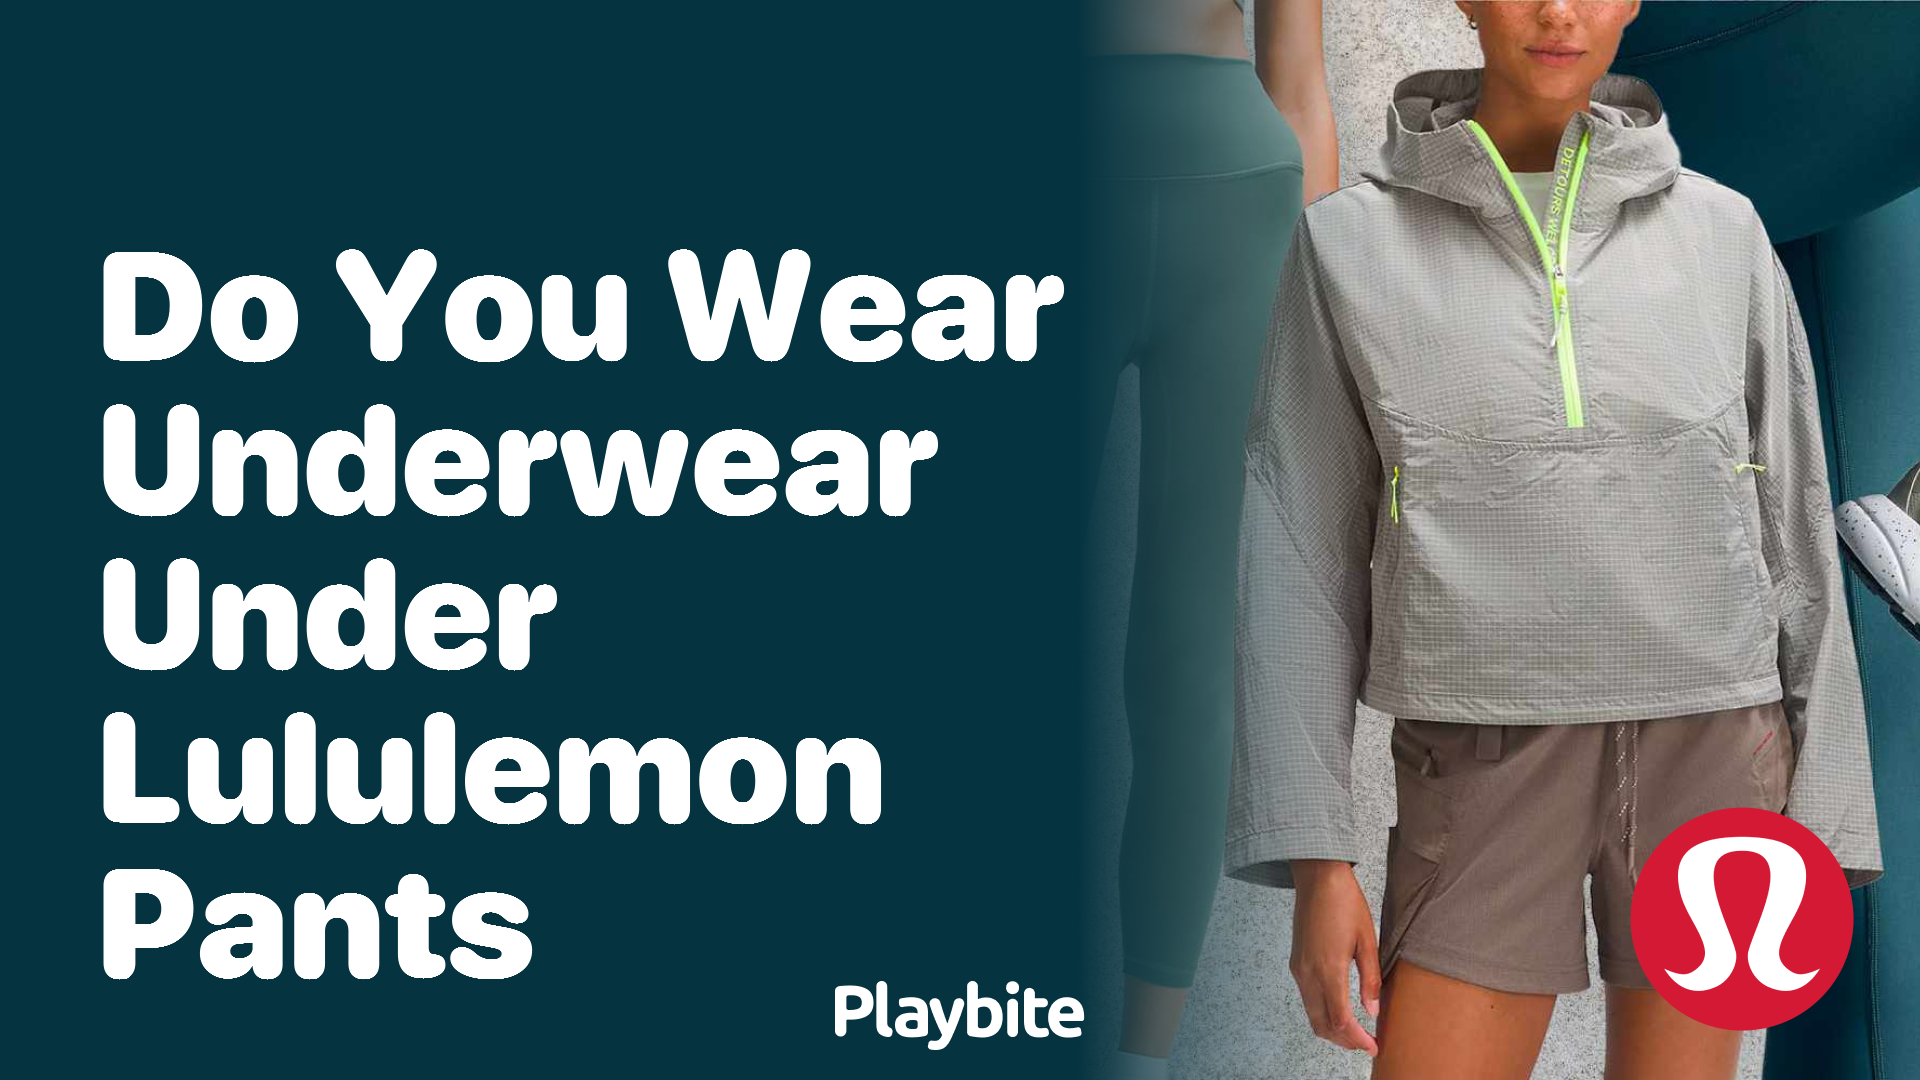 Do You Wear Underwear Under Lululemon Pants? Let's Find Out